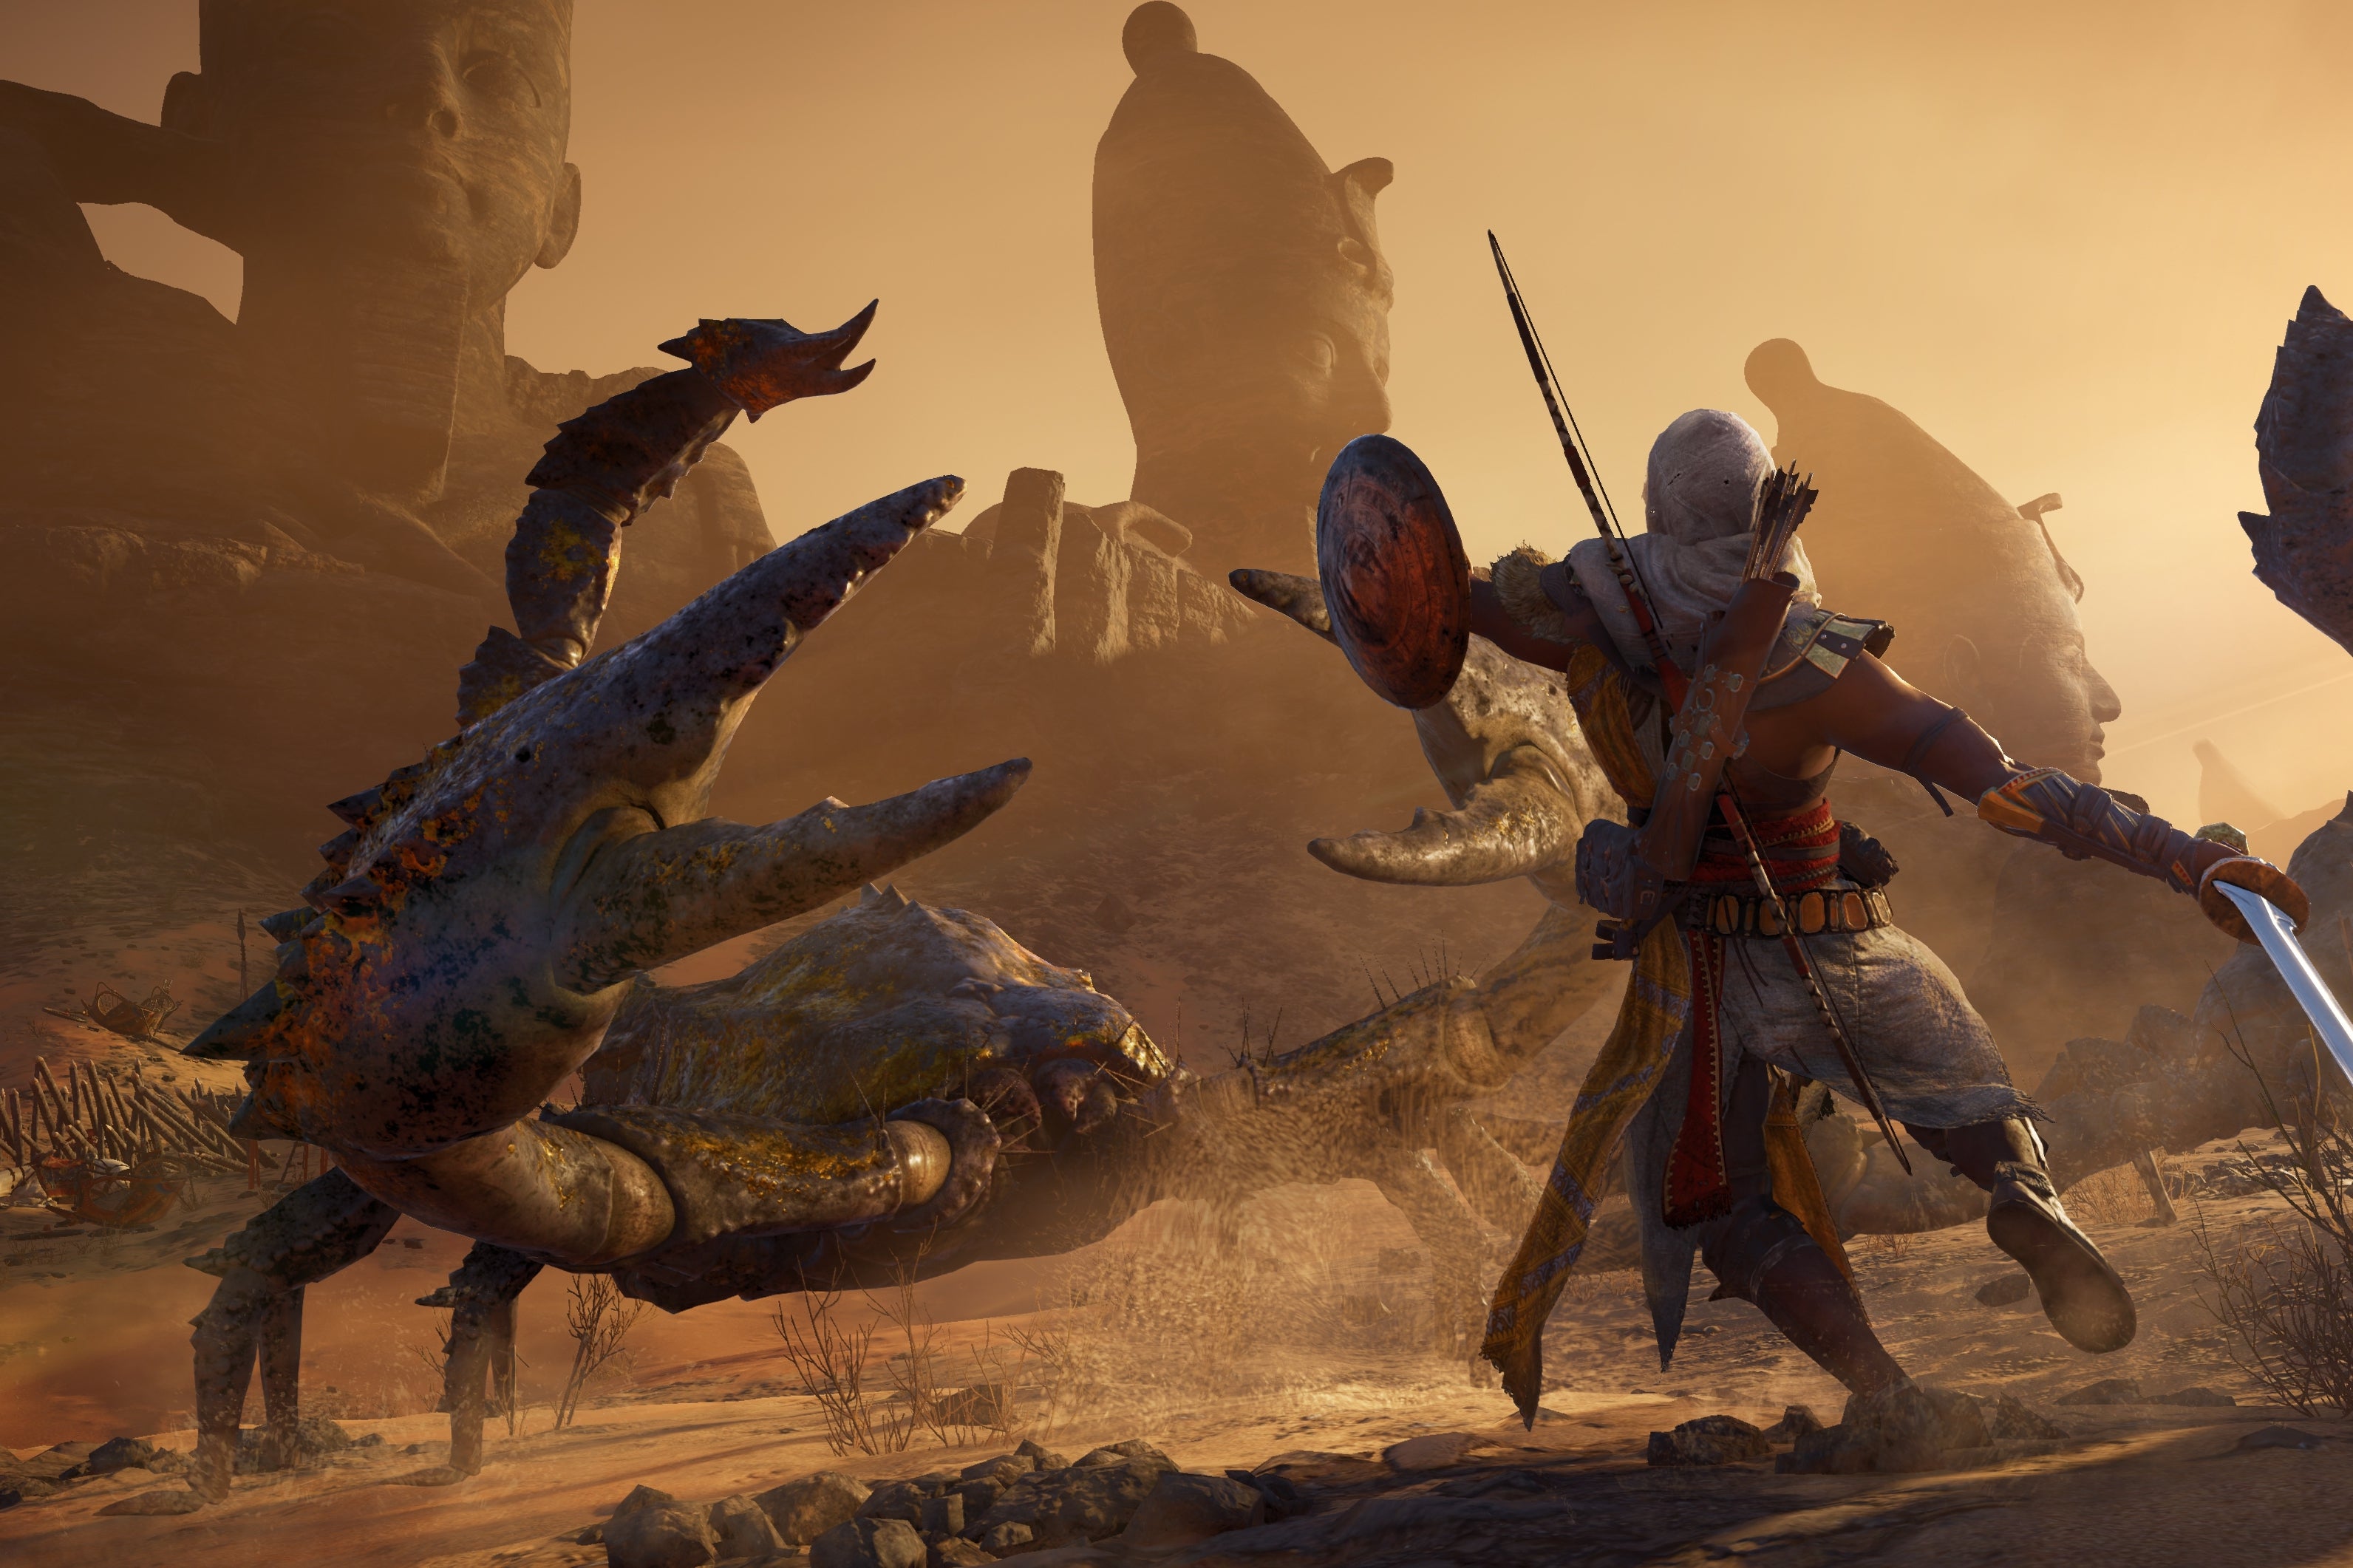 Afbeeldingen van Assassin's Creed Origins: The Curse of the Pharaohs DLC uitgesteld